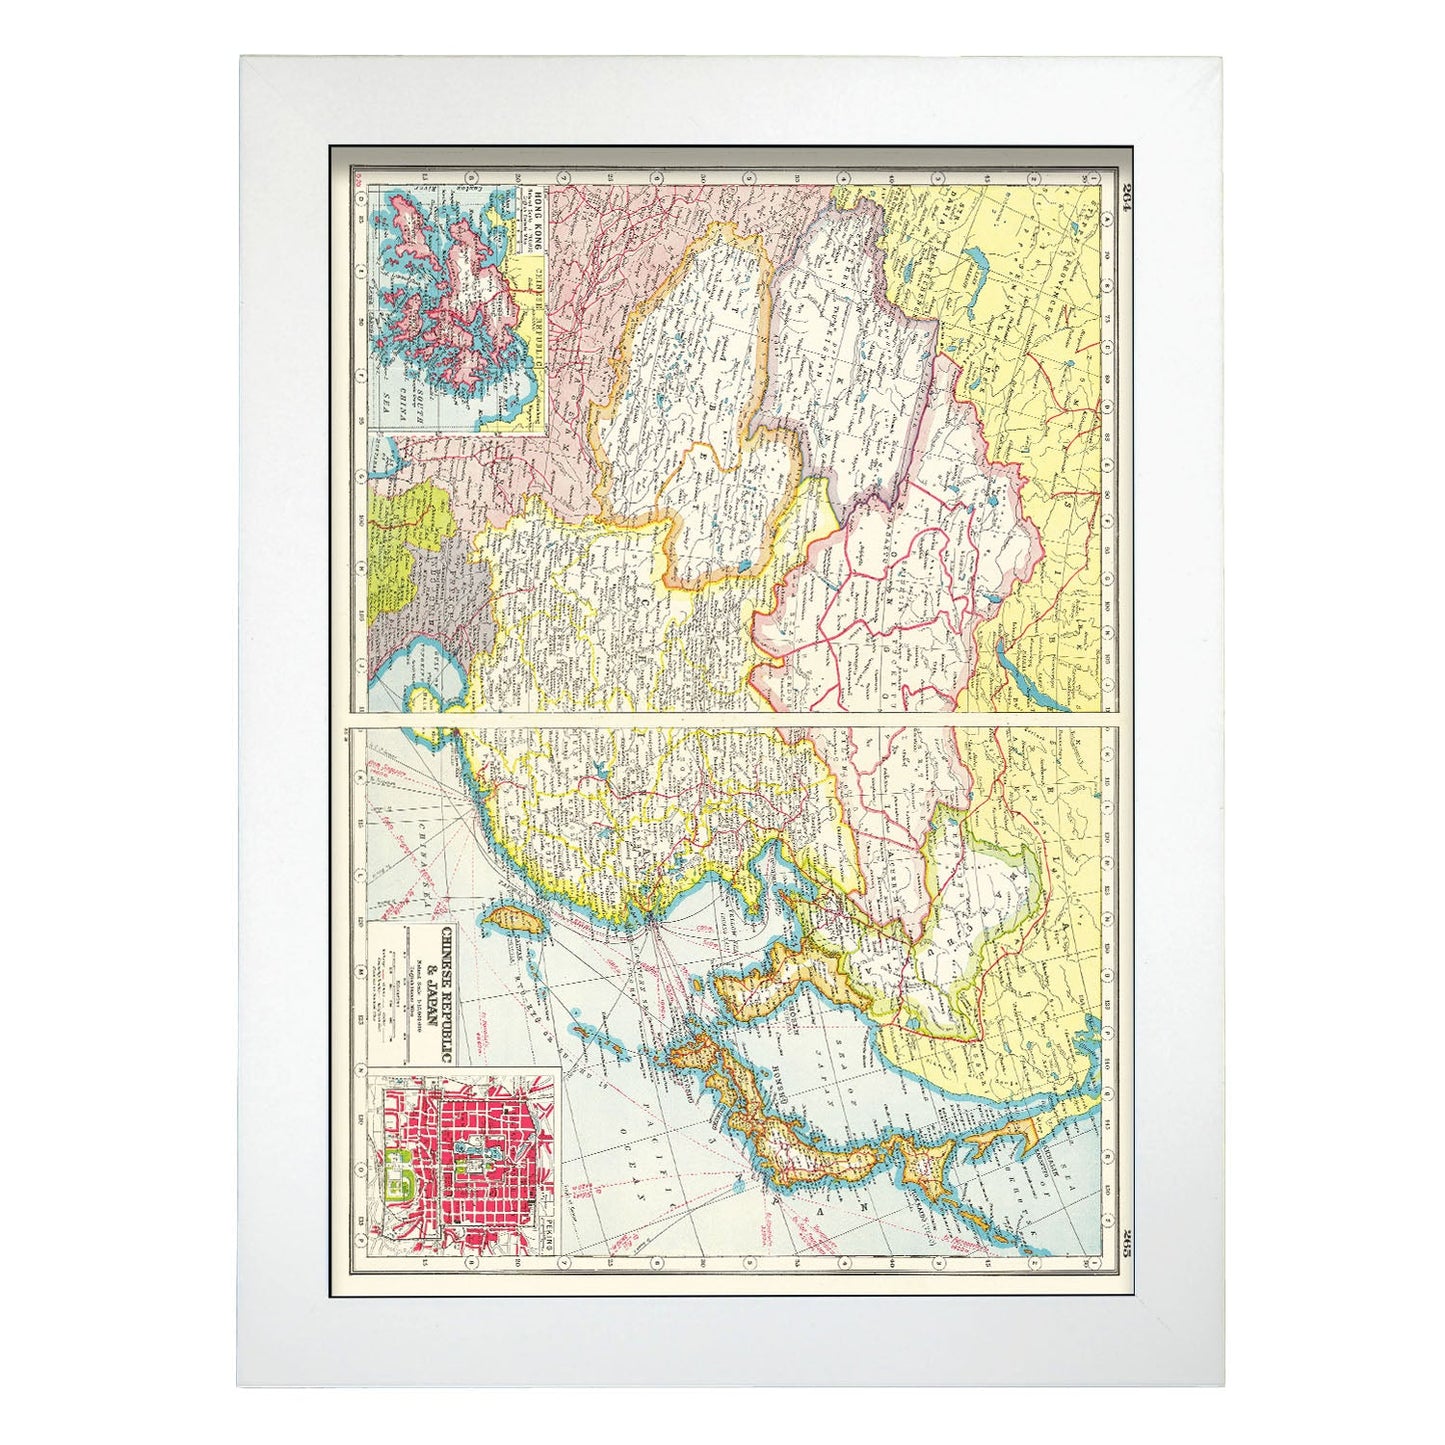 1920 map of the Chinese Republic Japan 2-Artwork-Nacnic-A4-Marco Blanco-Nacnic Estudio SL